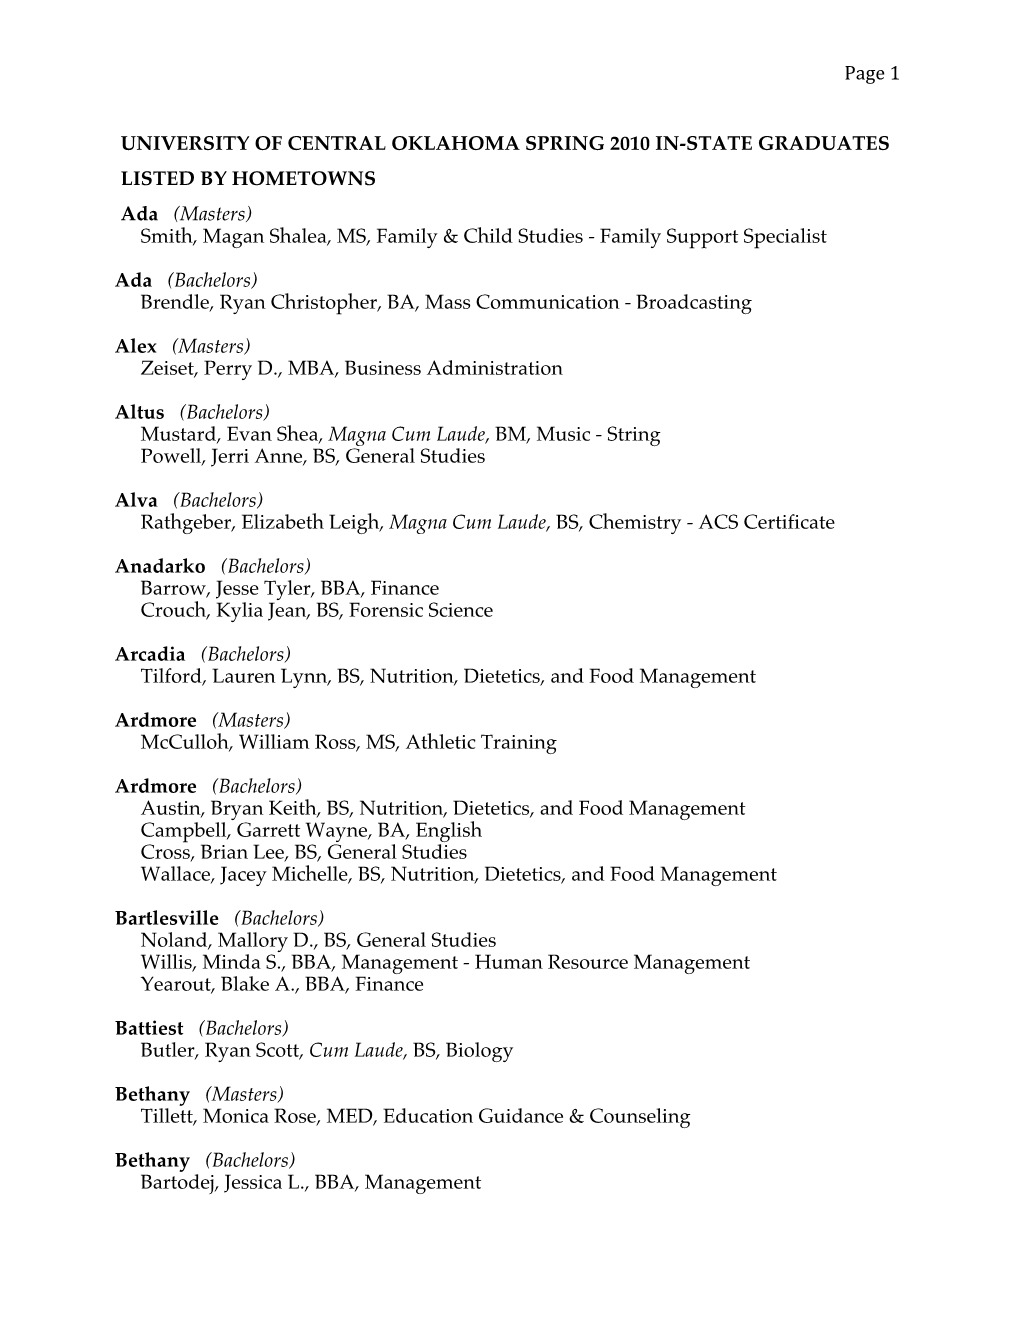 Spring 2010 Graduation List